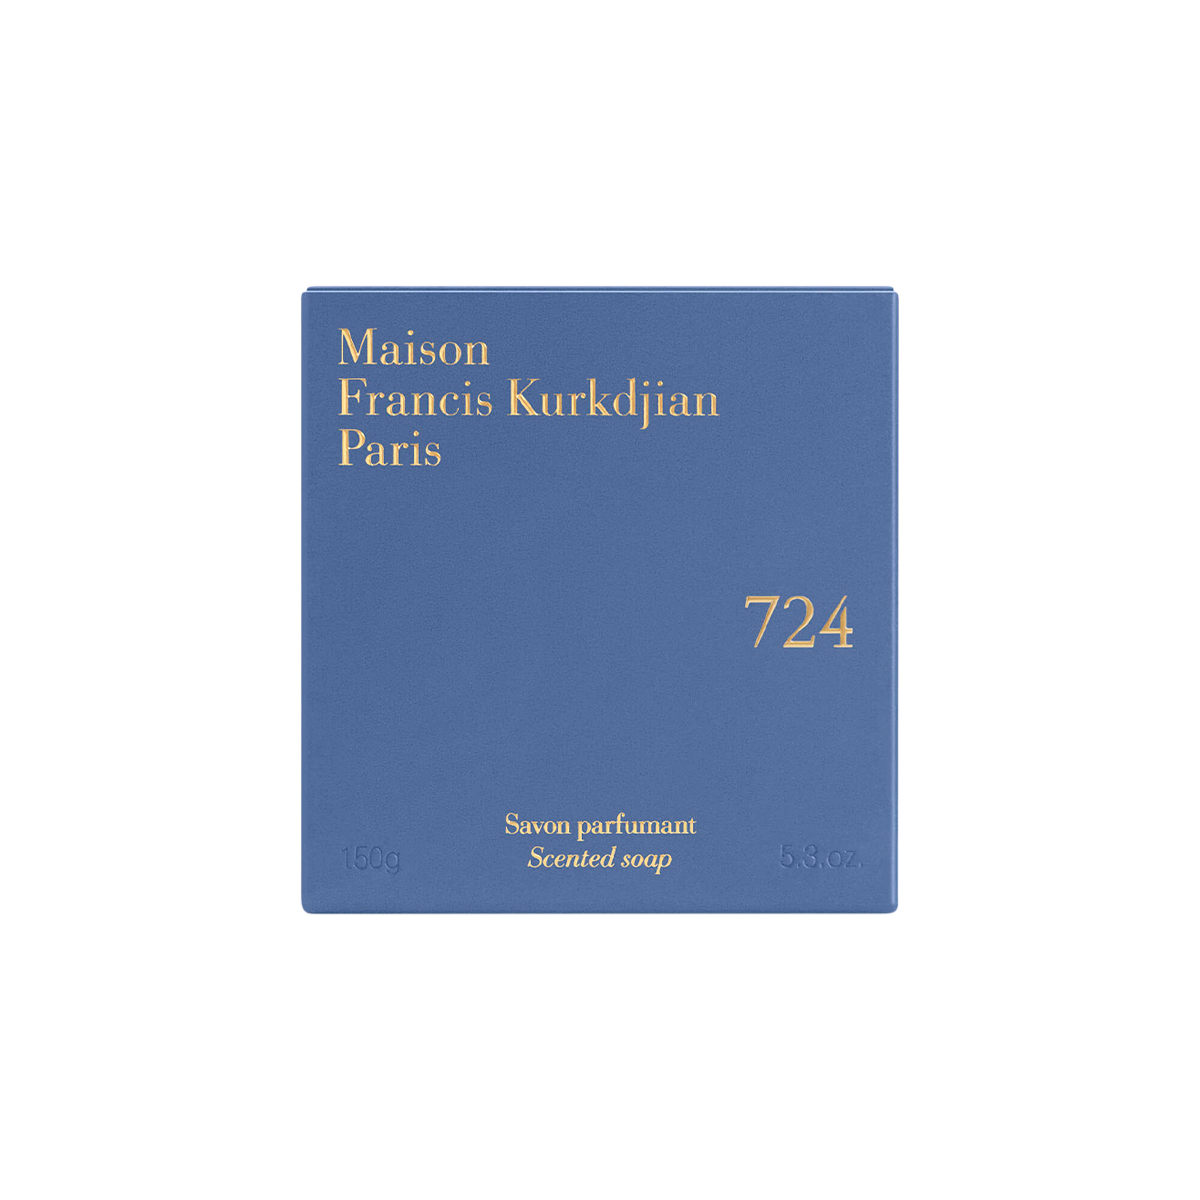 Maison Francis Kurkdjian - 724 Scented soap